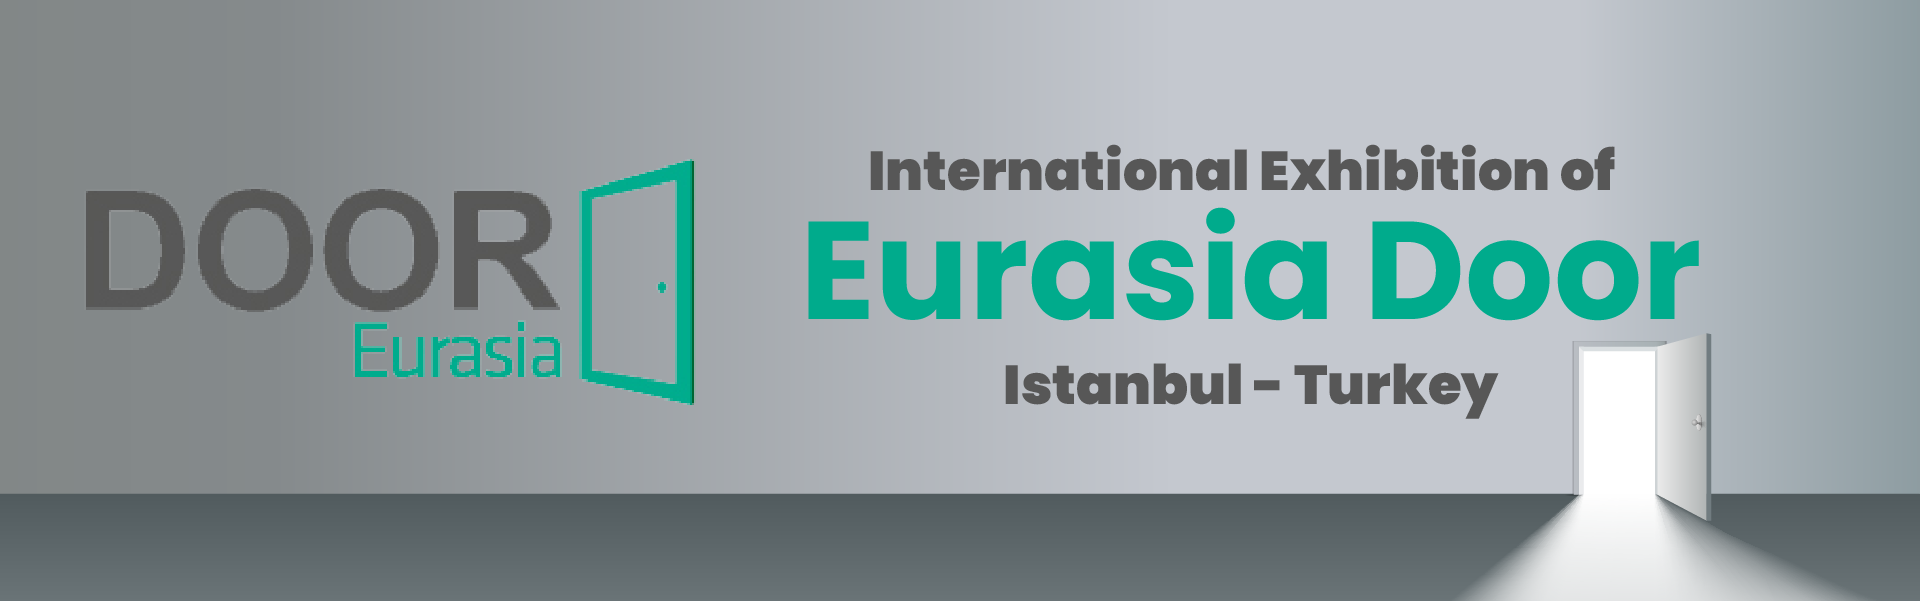 Eurasia Door Fair Exhibition Istanbul Turkey